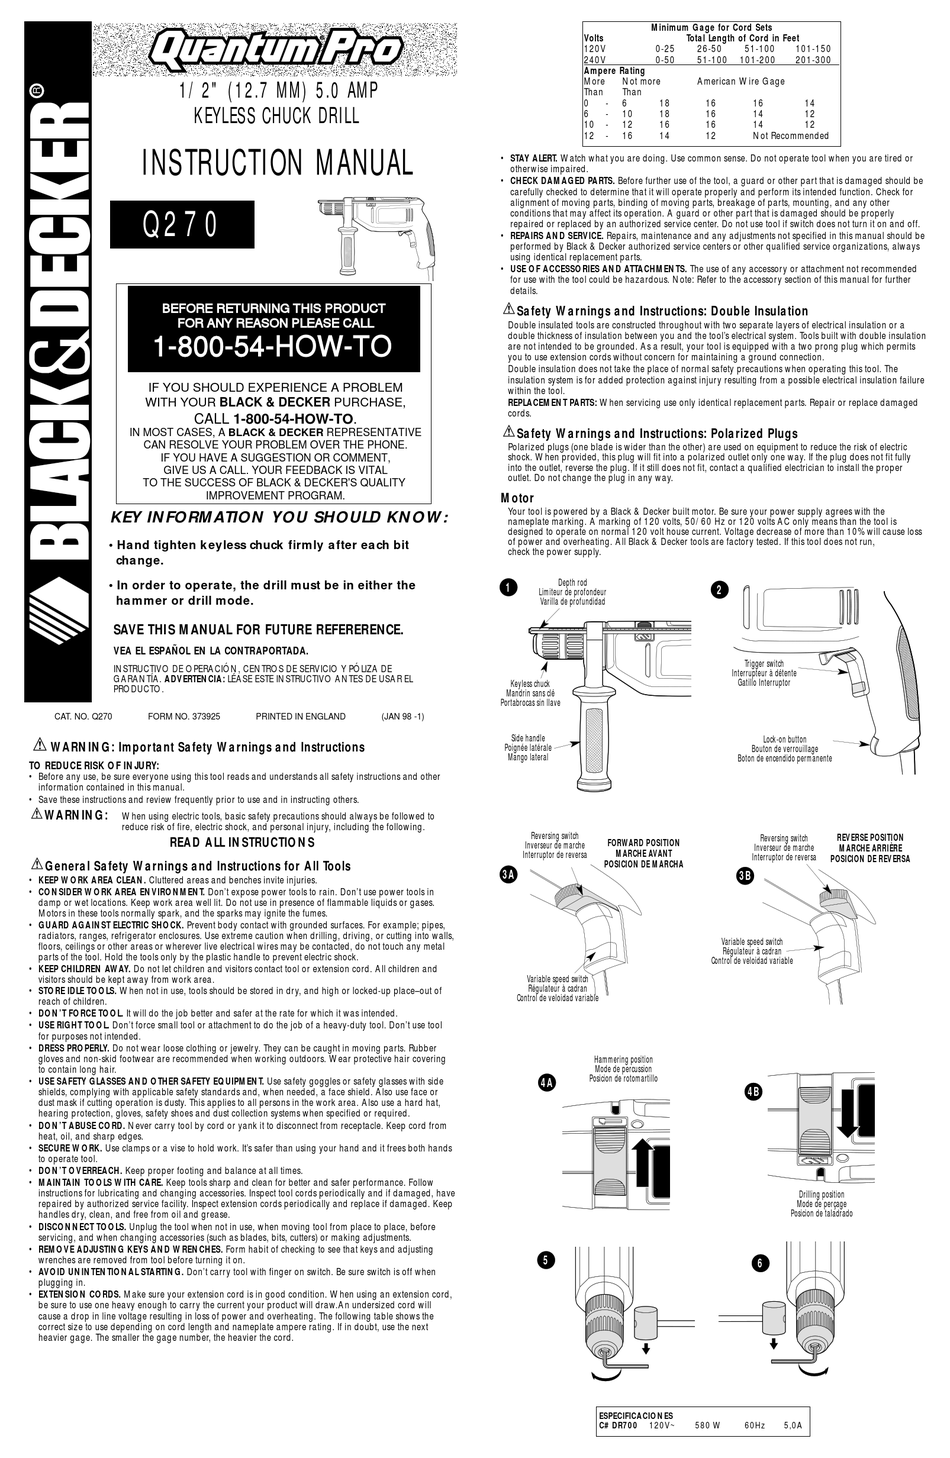 BLACK & DECKER CTL36 INSTRUCTION MANUAL Pdf Download